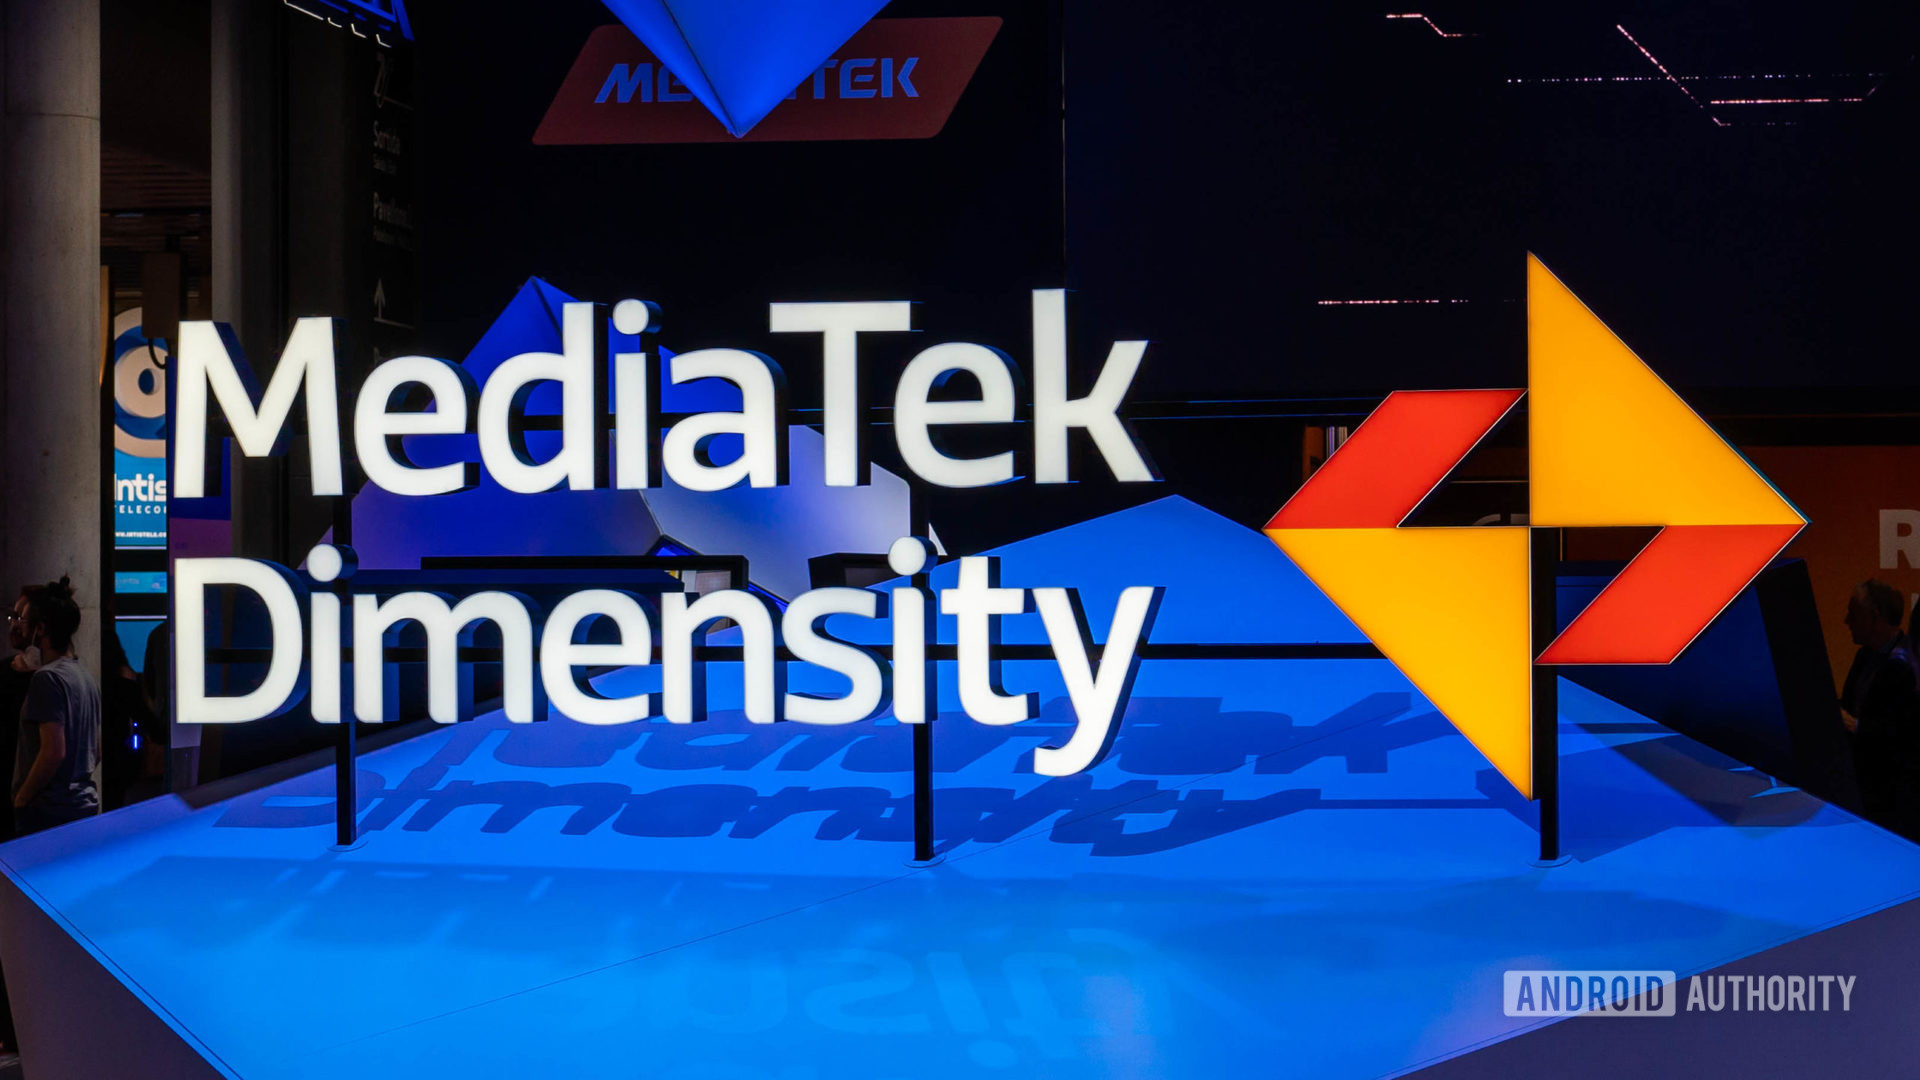 MediaTek Dimensity logo at MWC